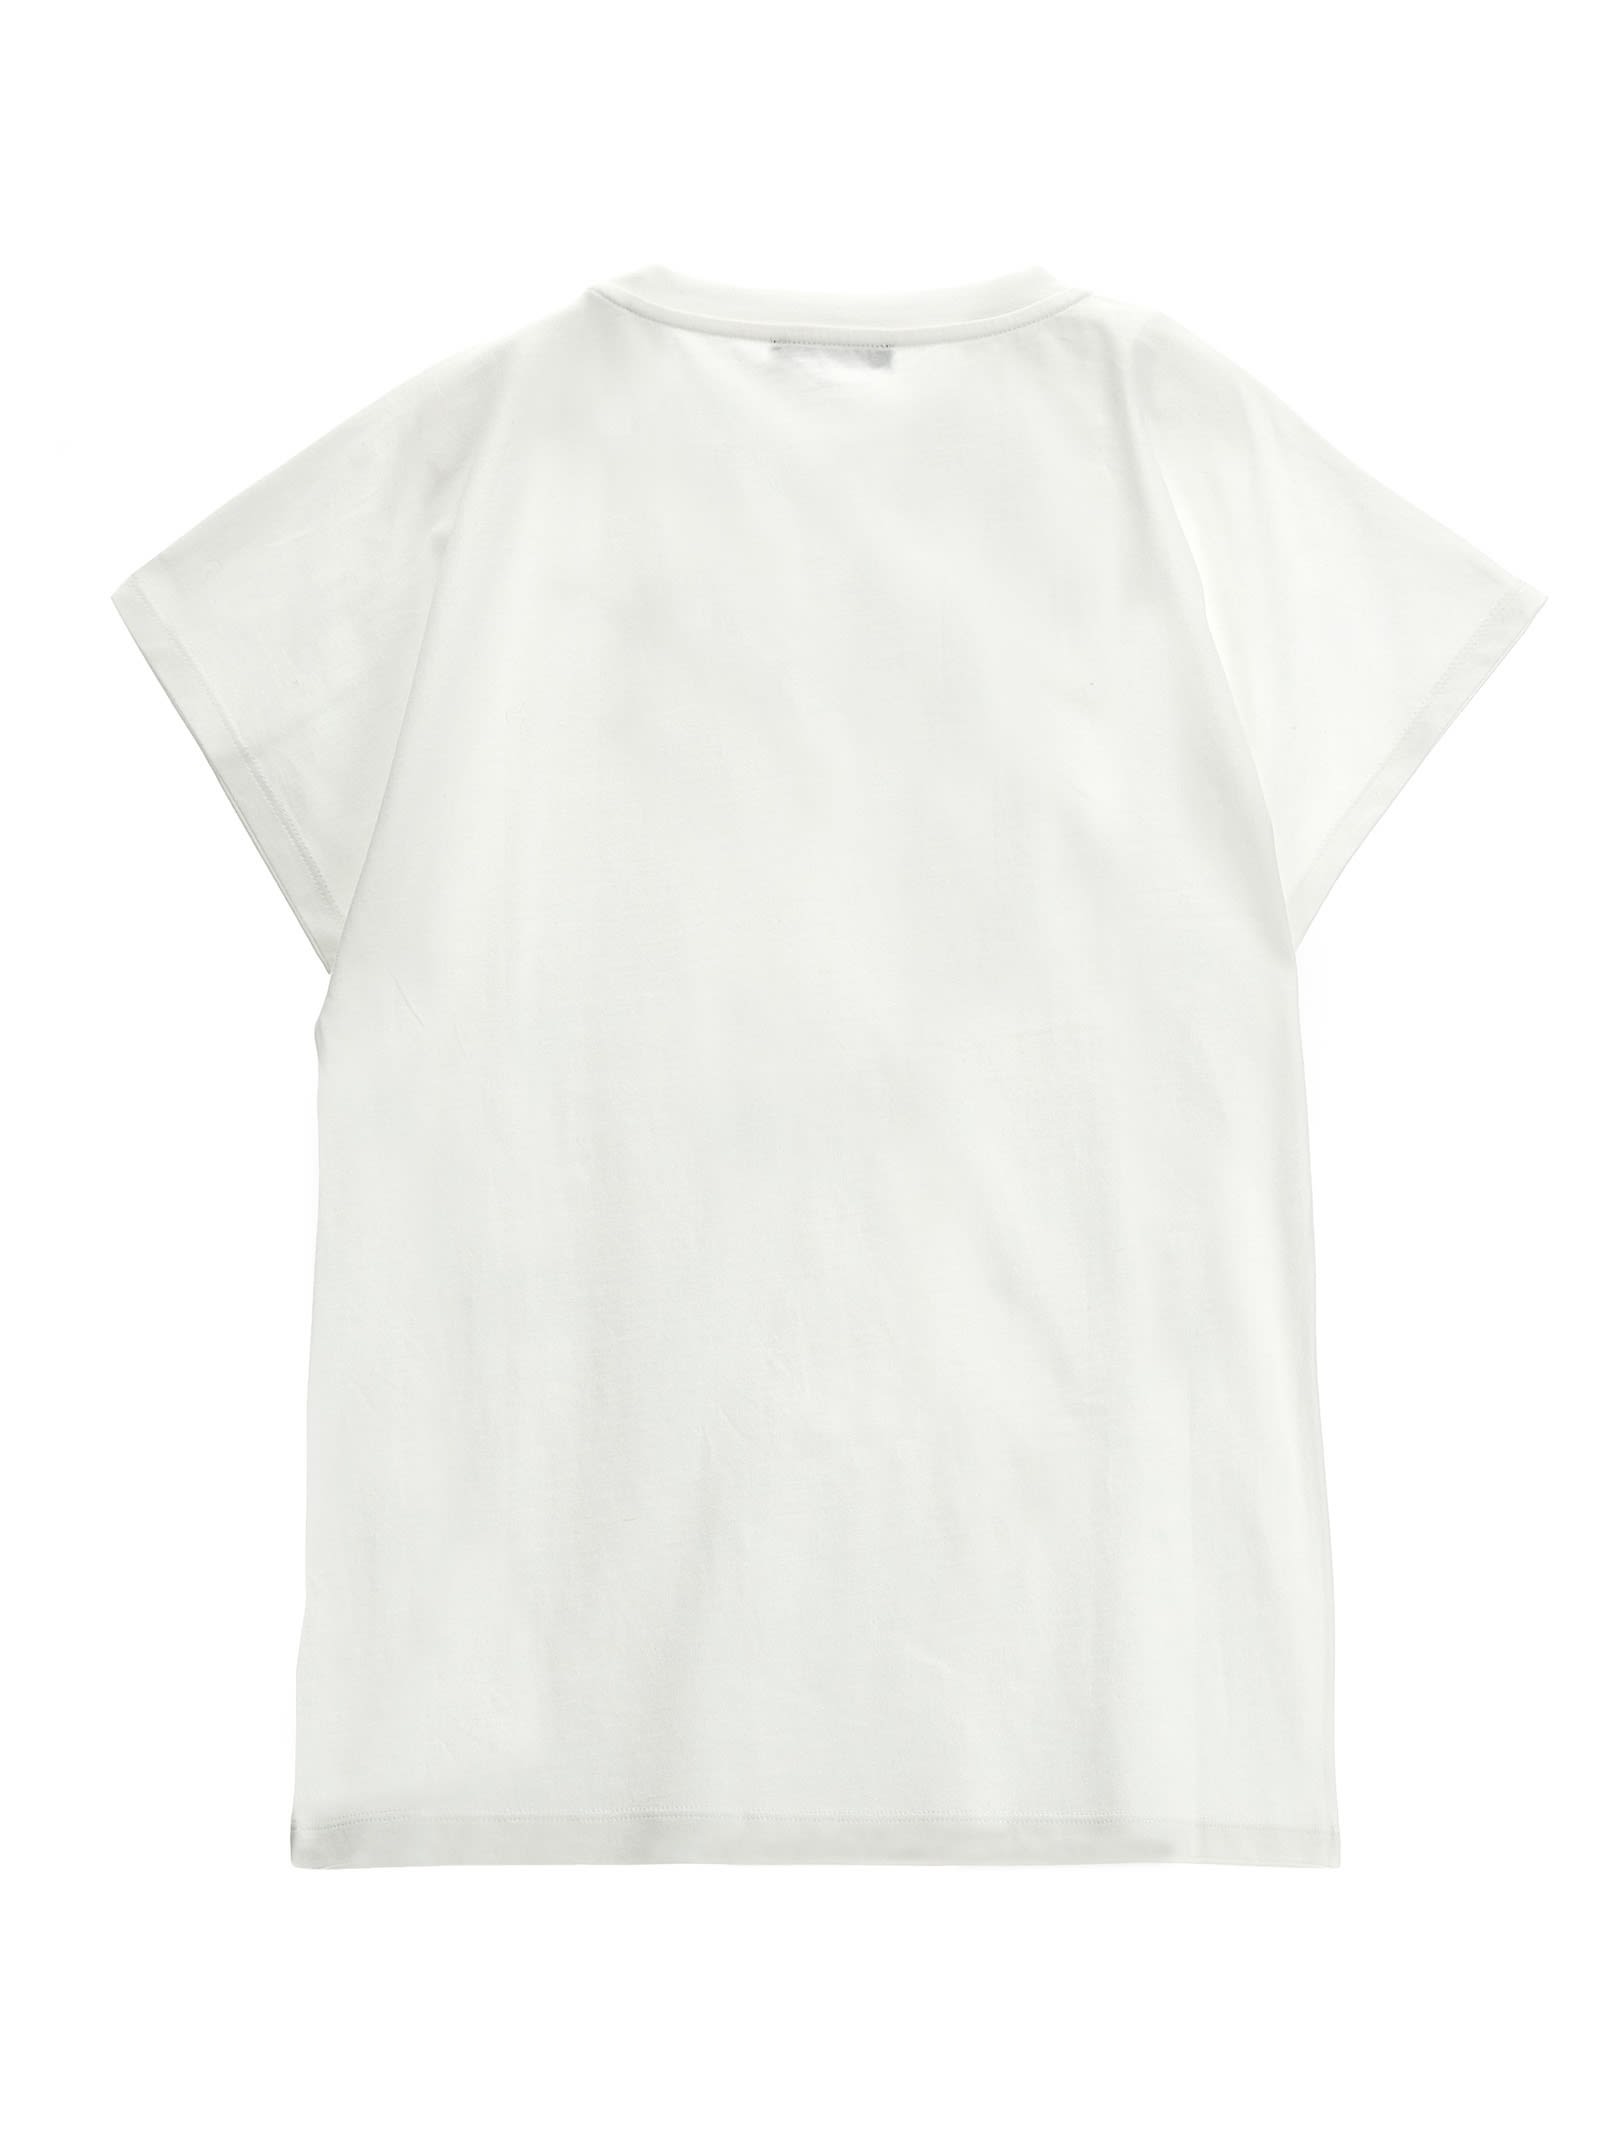 Shop Balmain Rhinestone Logo T-shirt In White/gold